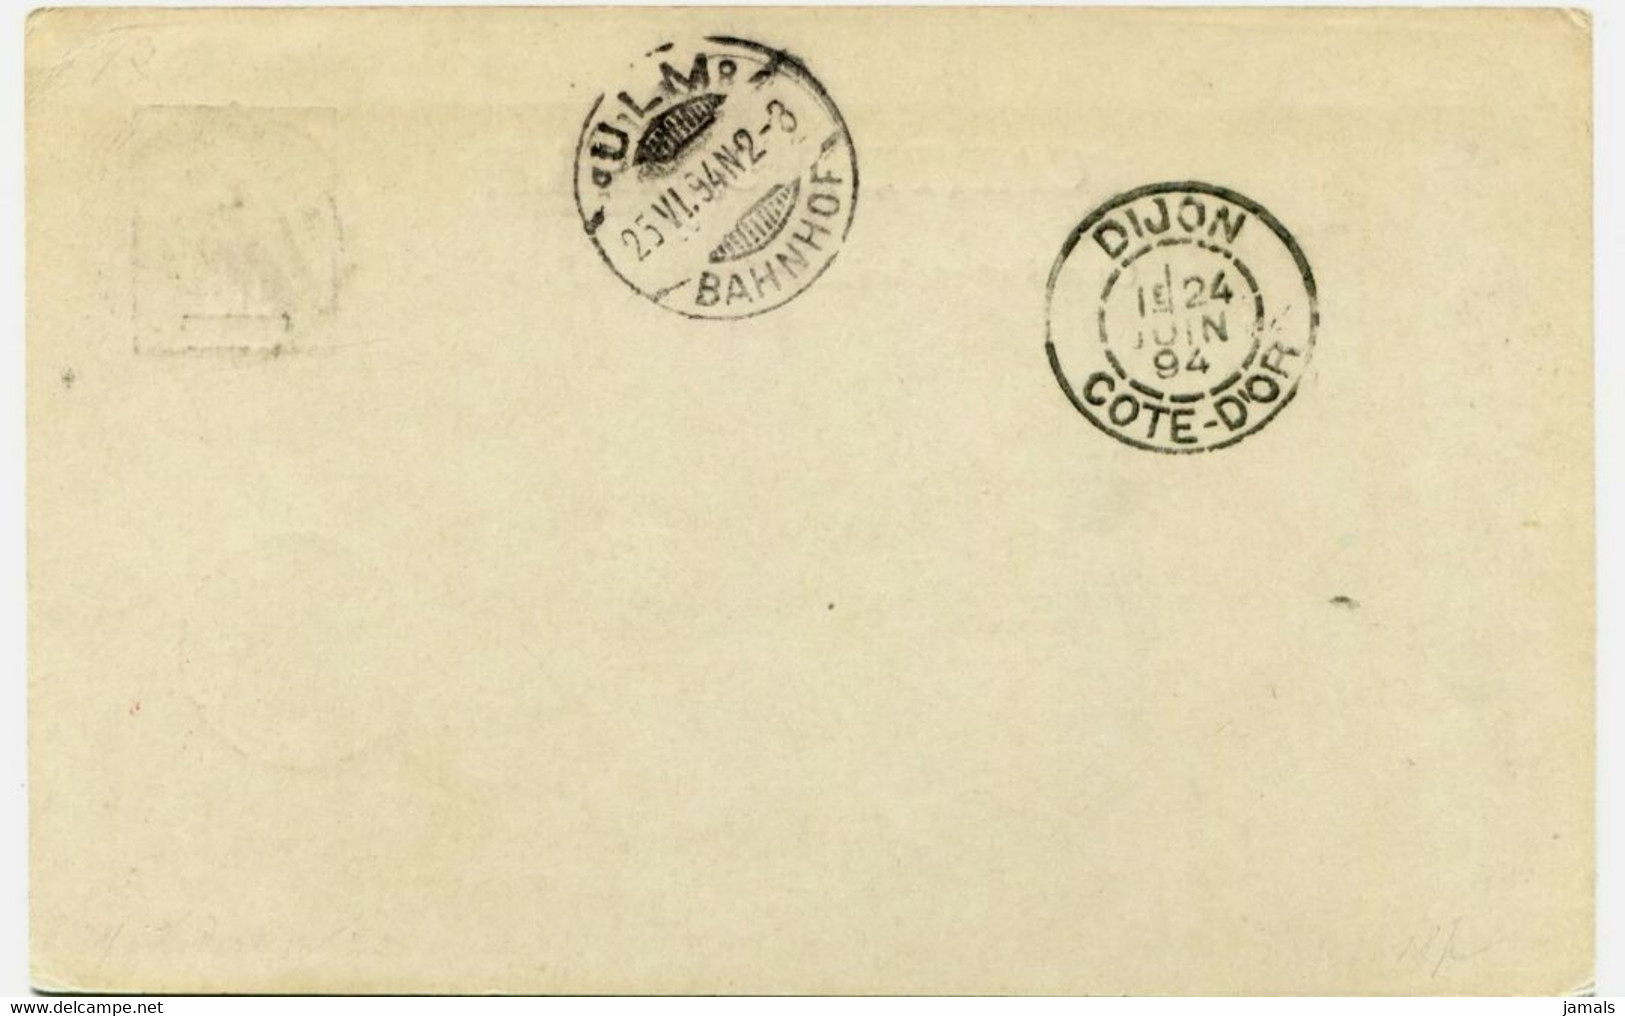 French India, Postal Stationary Card, Pondichery Postmark - Lettres & Documents